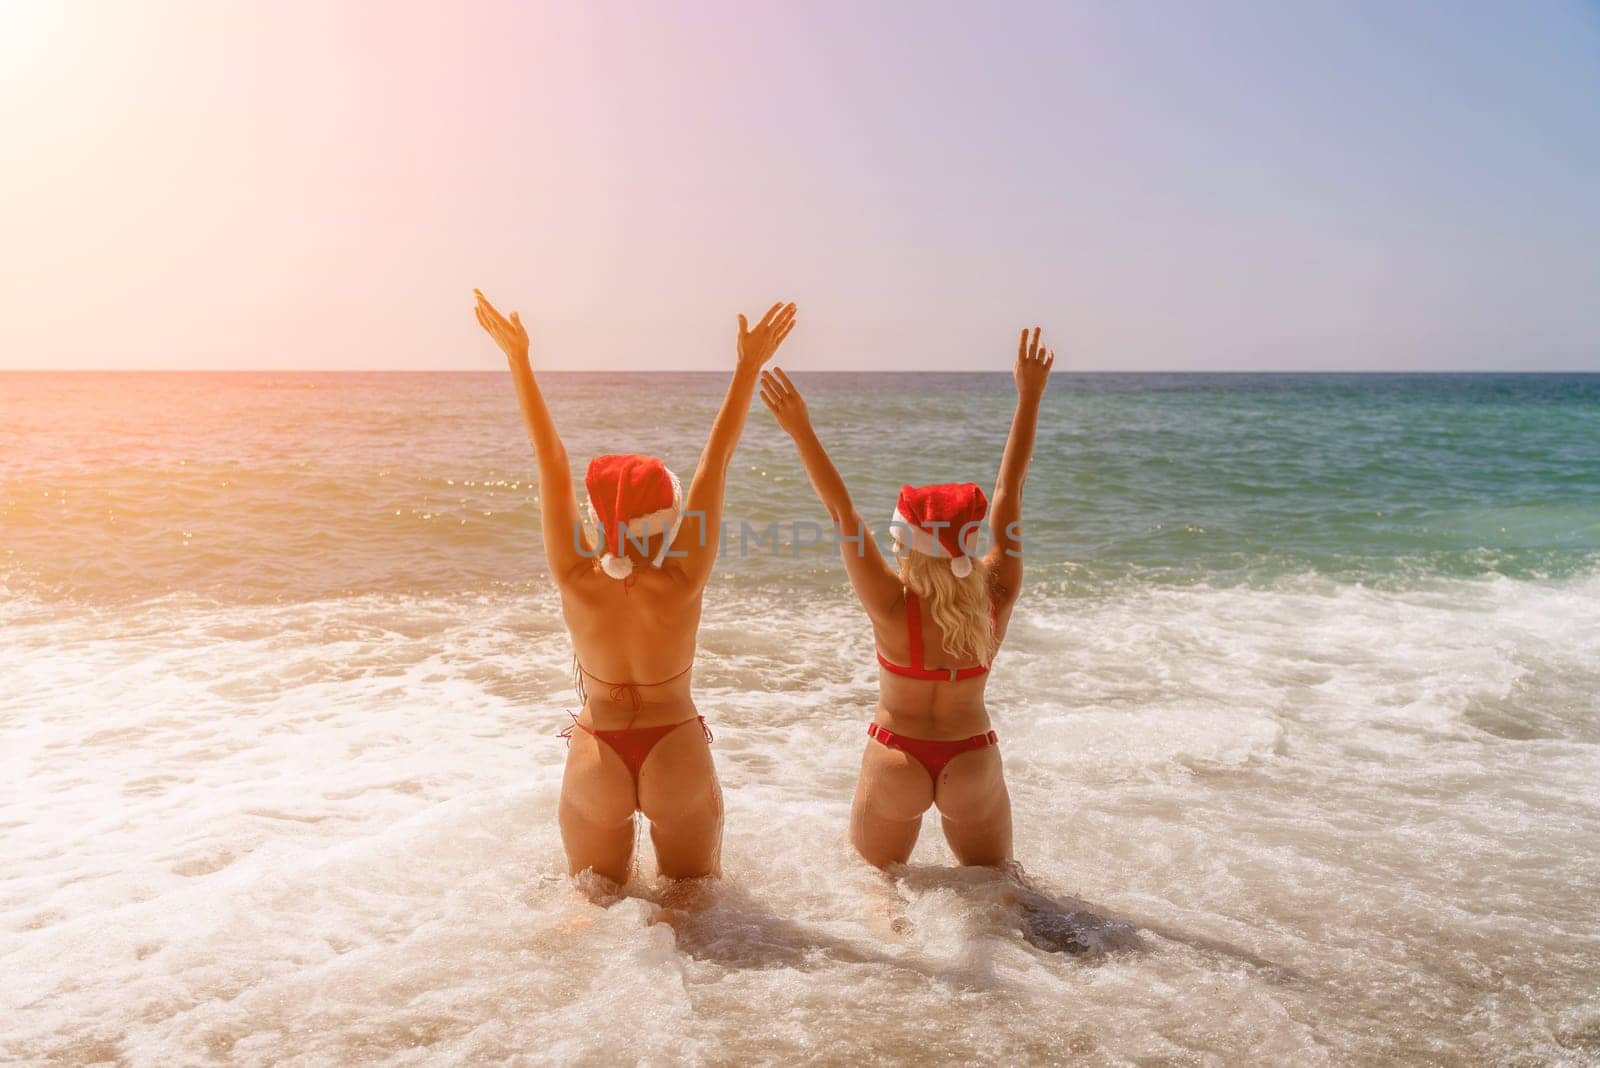 Women Santa hats ocean play. Seaside, beach daytime, enjoying beach fun. Two women in red swimsuits and Santa hats are enjoying themselves in the ocean, kneeling in the waves and raising their hands up. by Matiunina